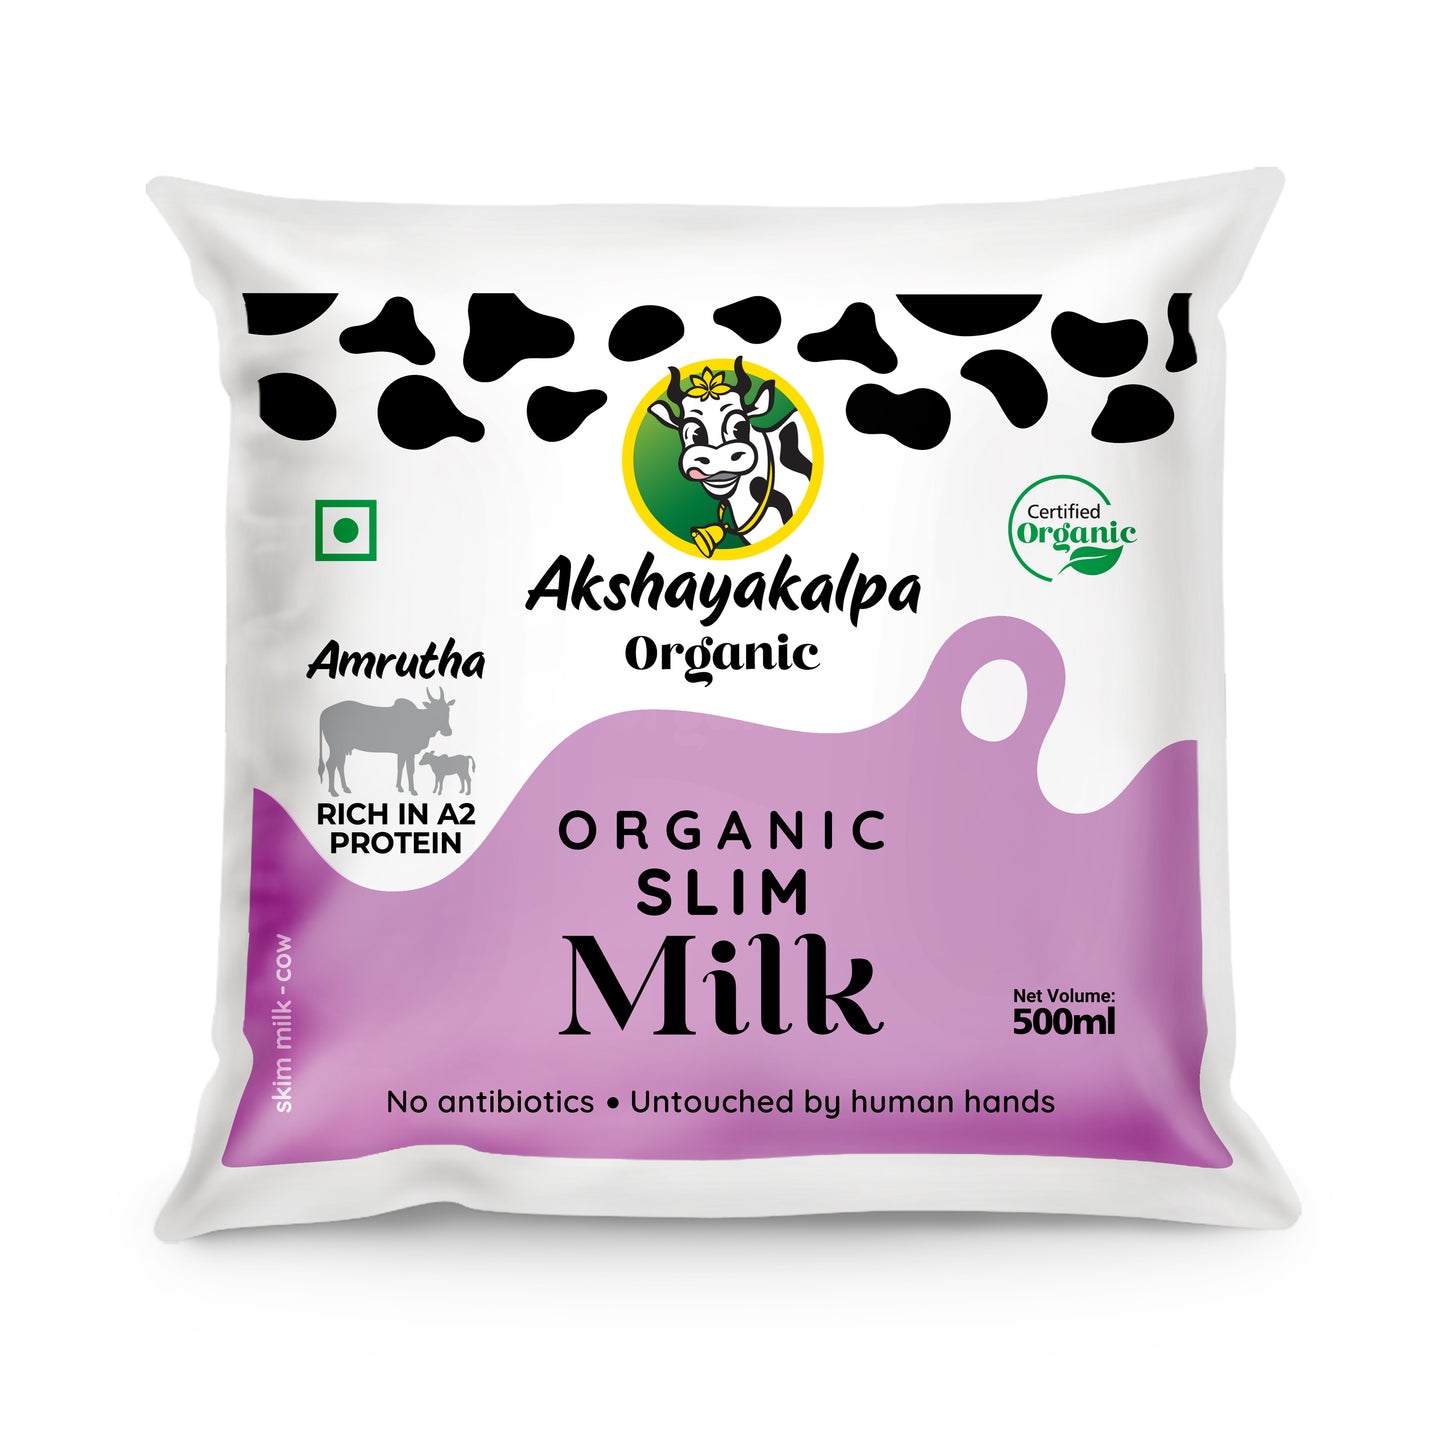 Akshayakalpa Amrutha - A2 SLIM Organic Milk, 500 ml